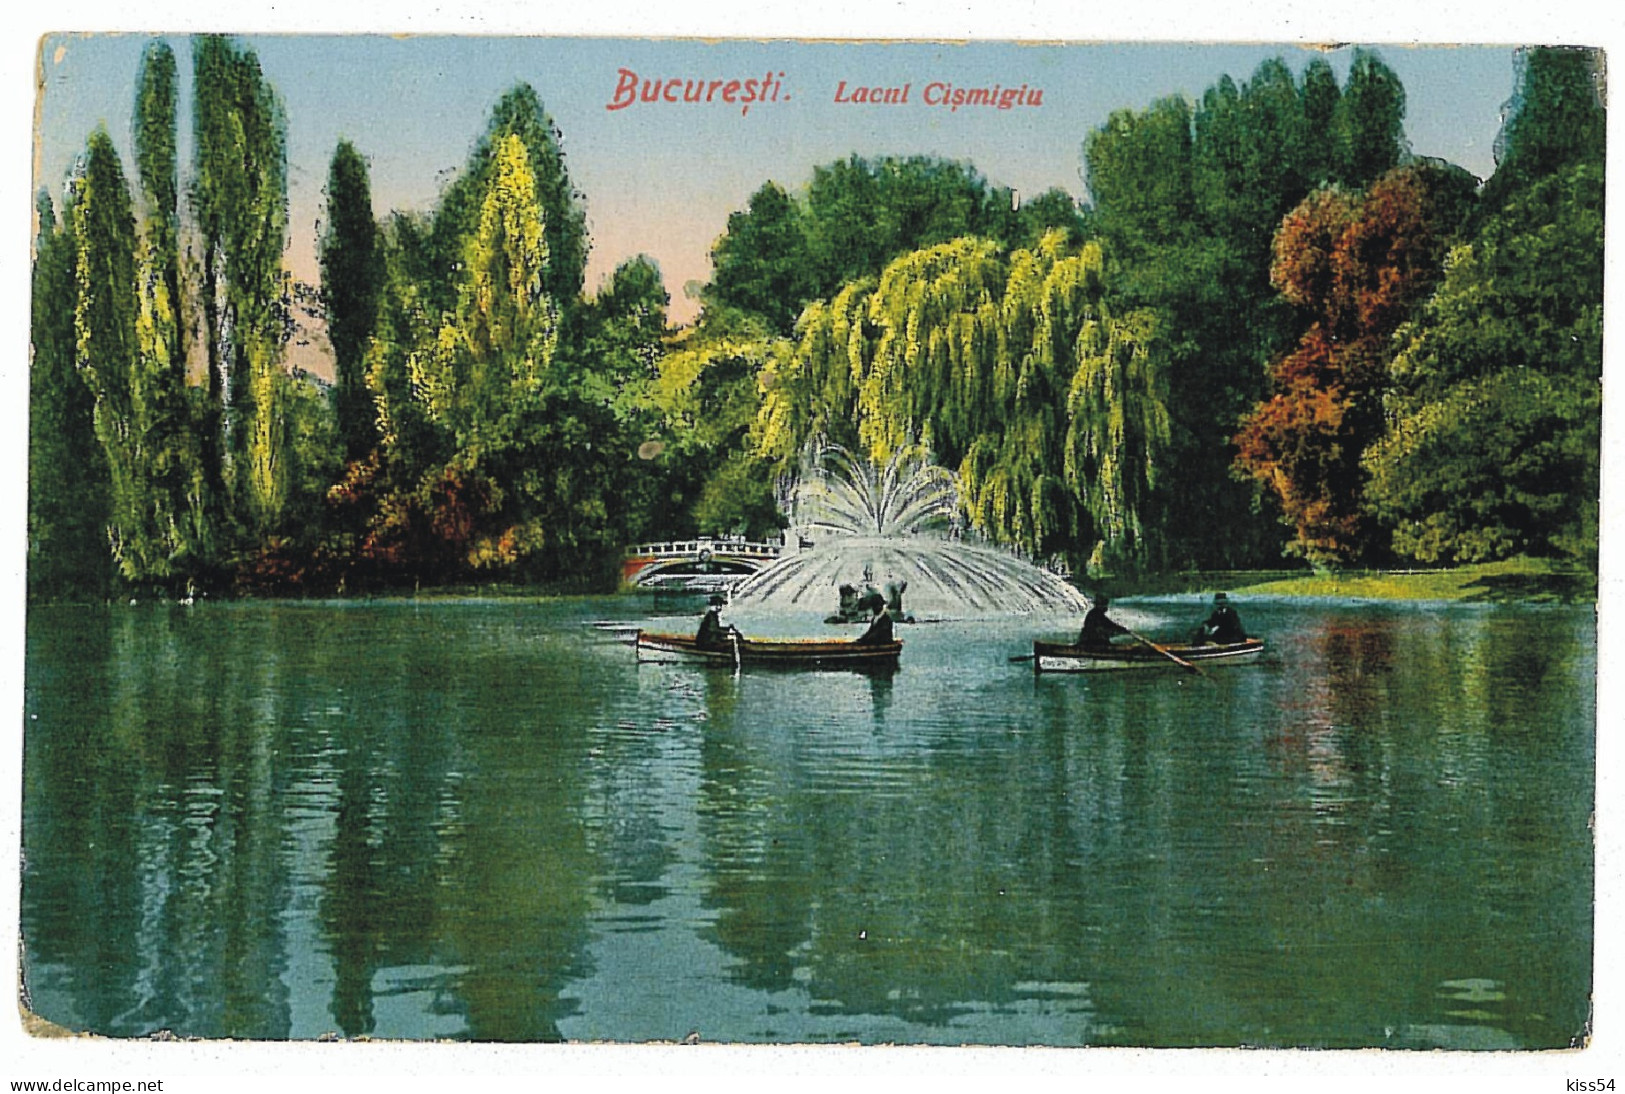 RO 52 - 1731 BUCURESTI, Lake Cismigiu, Romania - Old Postcard - Used - 1931 - Roumanie